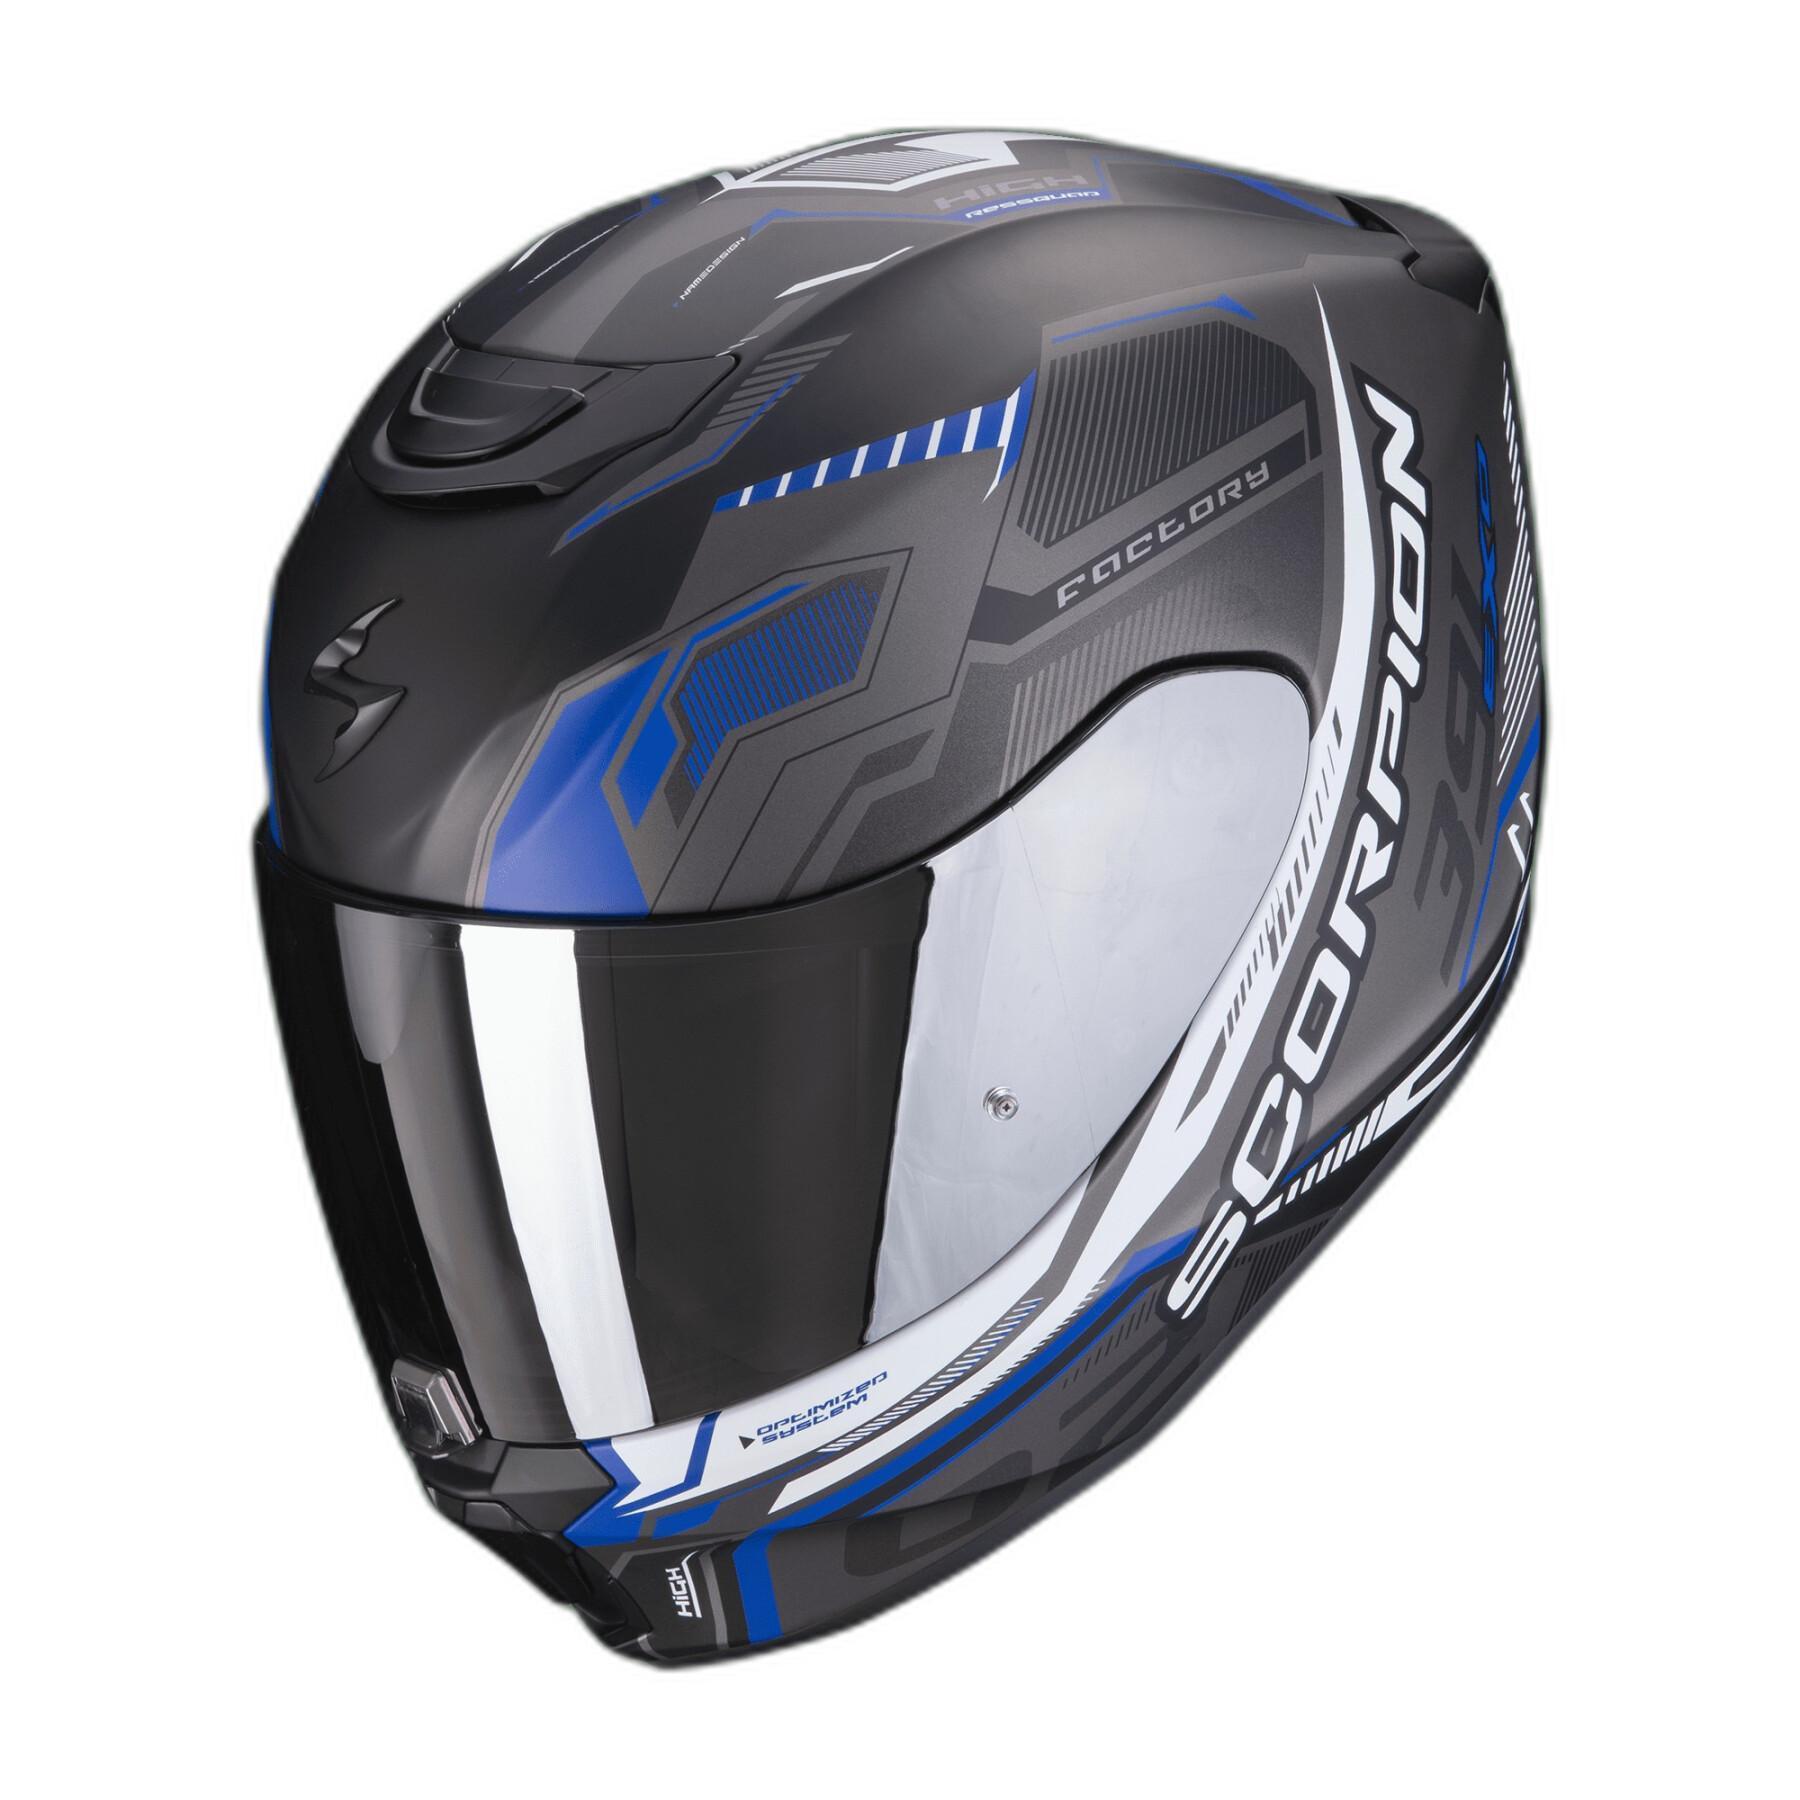 Full face motorcycle helmet Scorpion Exo-391 Haut ECE 22-06